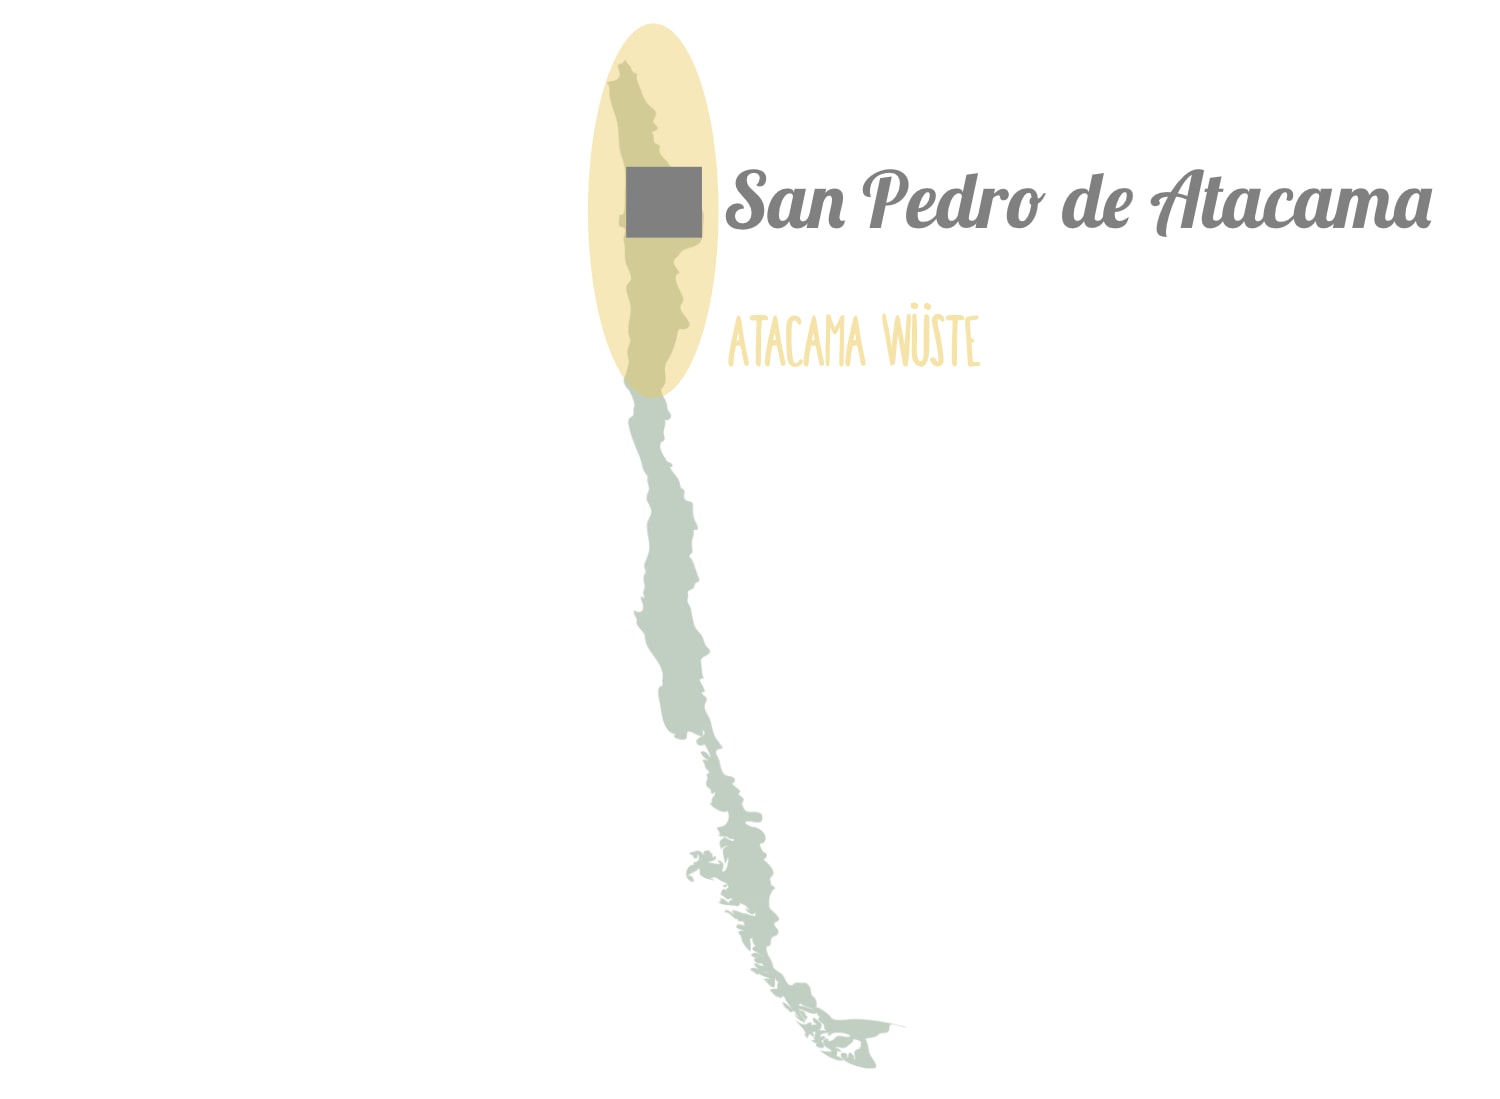 Atacama Wüste: Karte